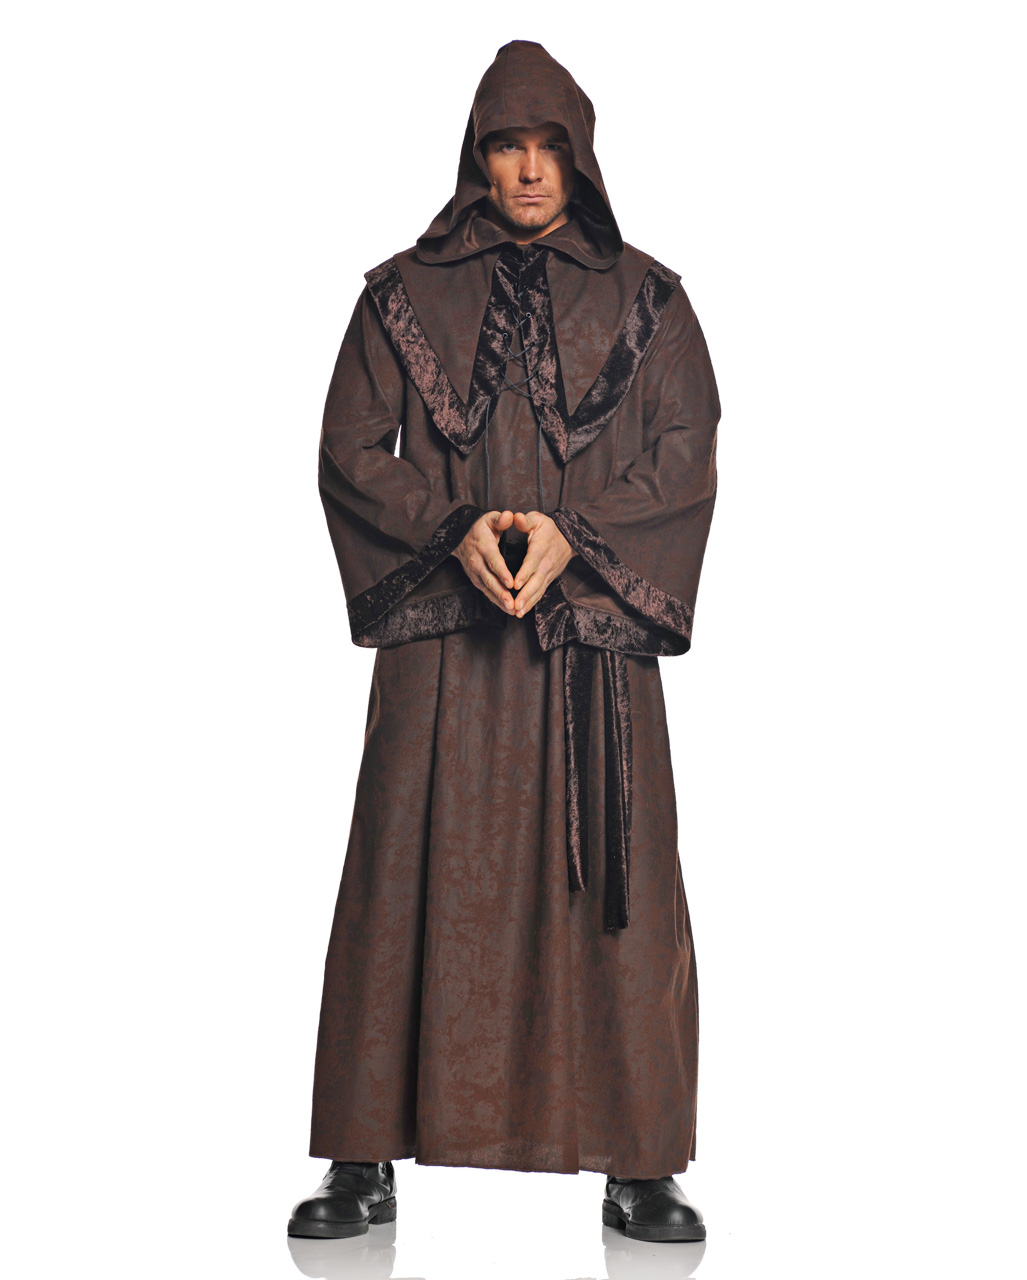 Männer Mittelalter Religiöse Priester Kostüm Mönch Halloween Cosplay Kapuze Robe 